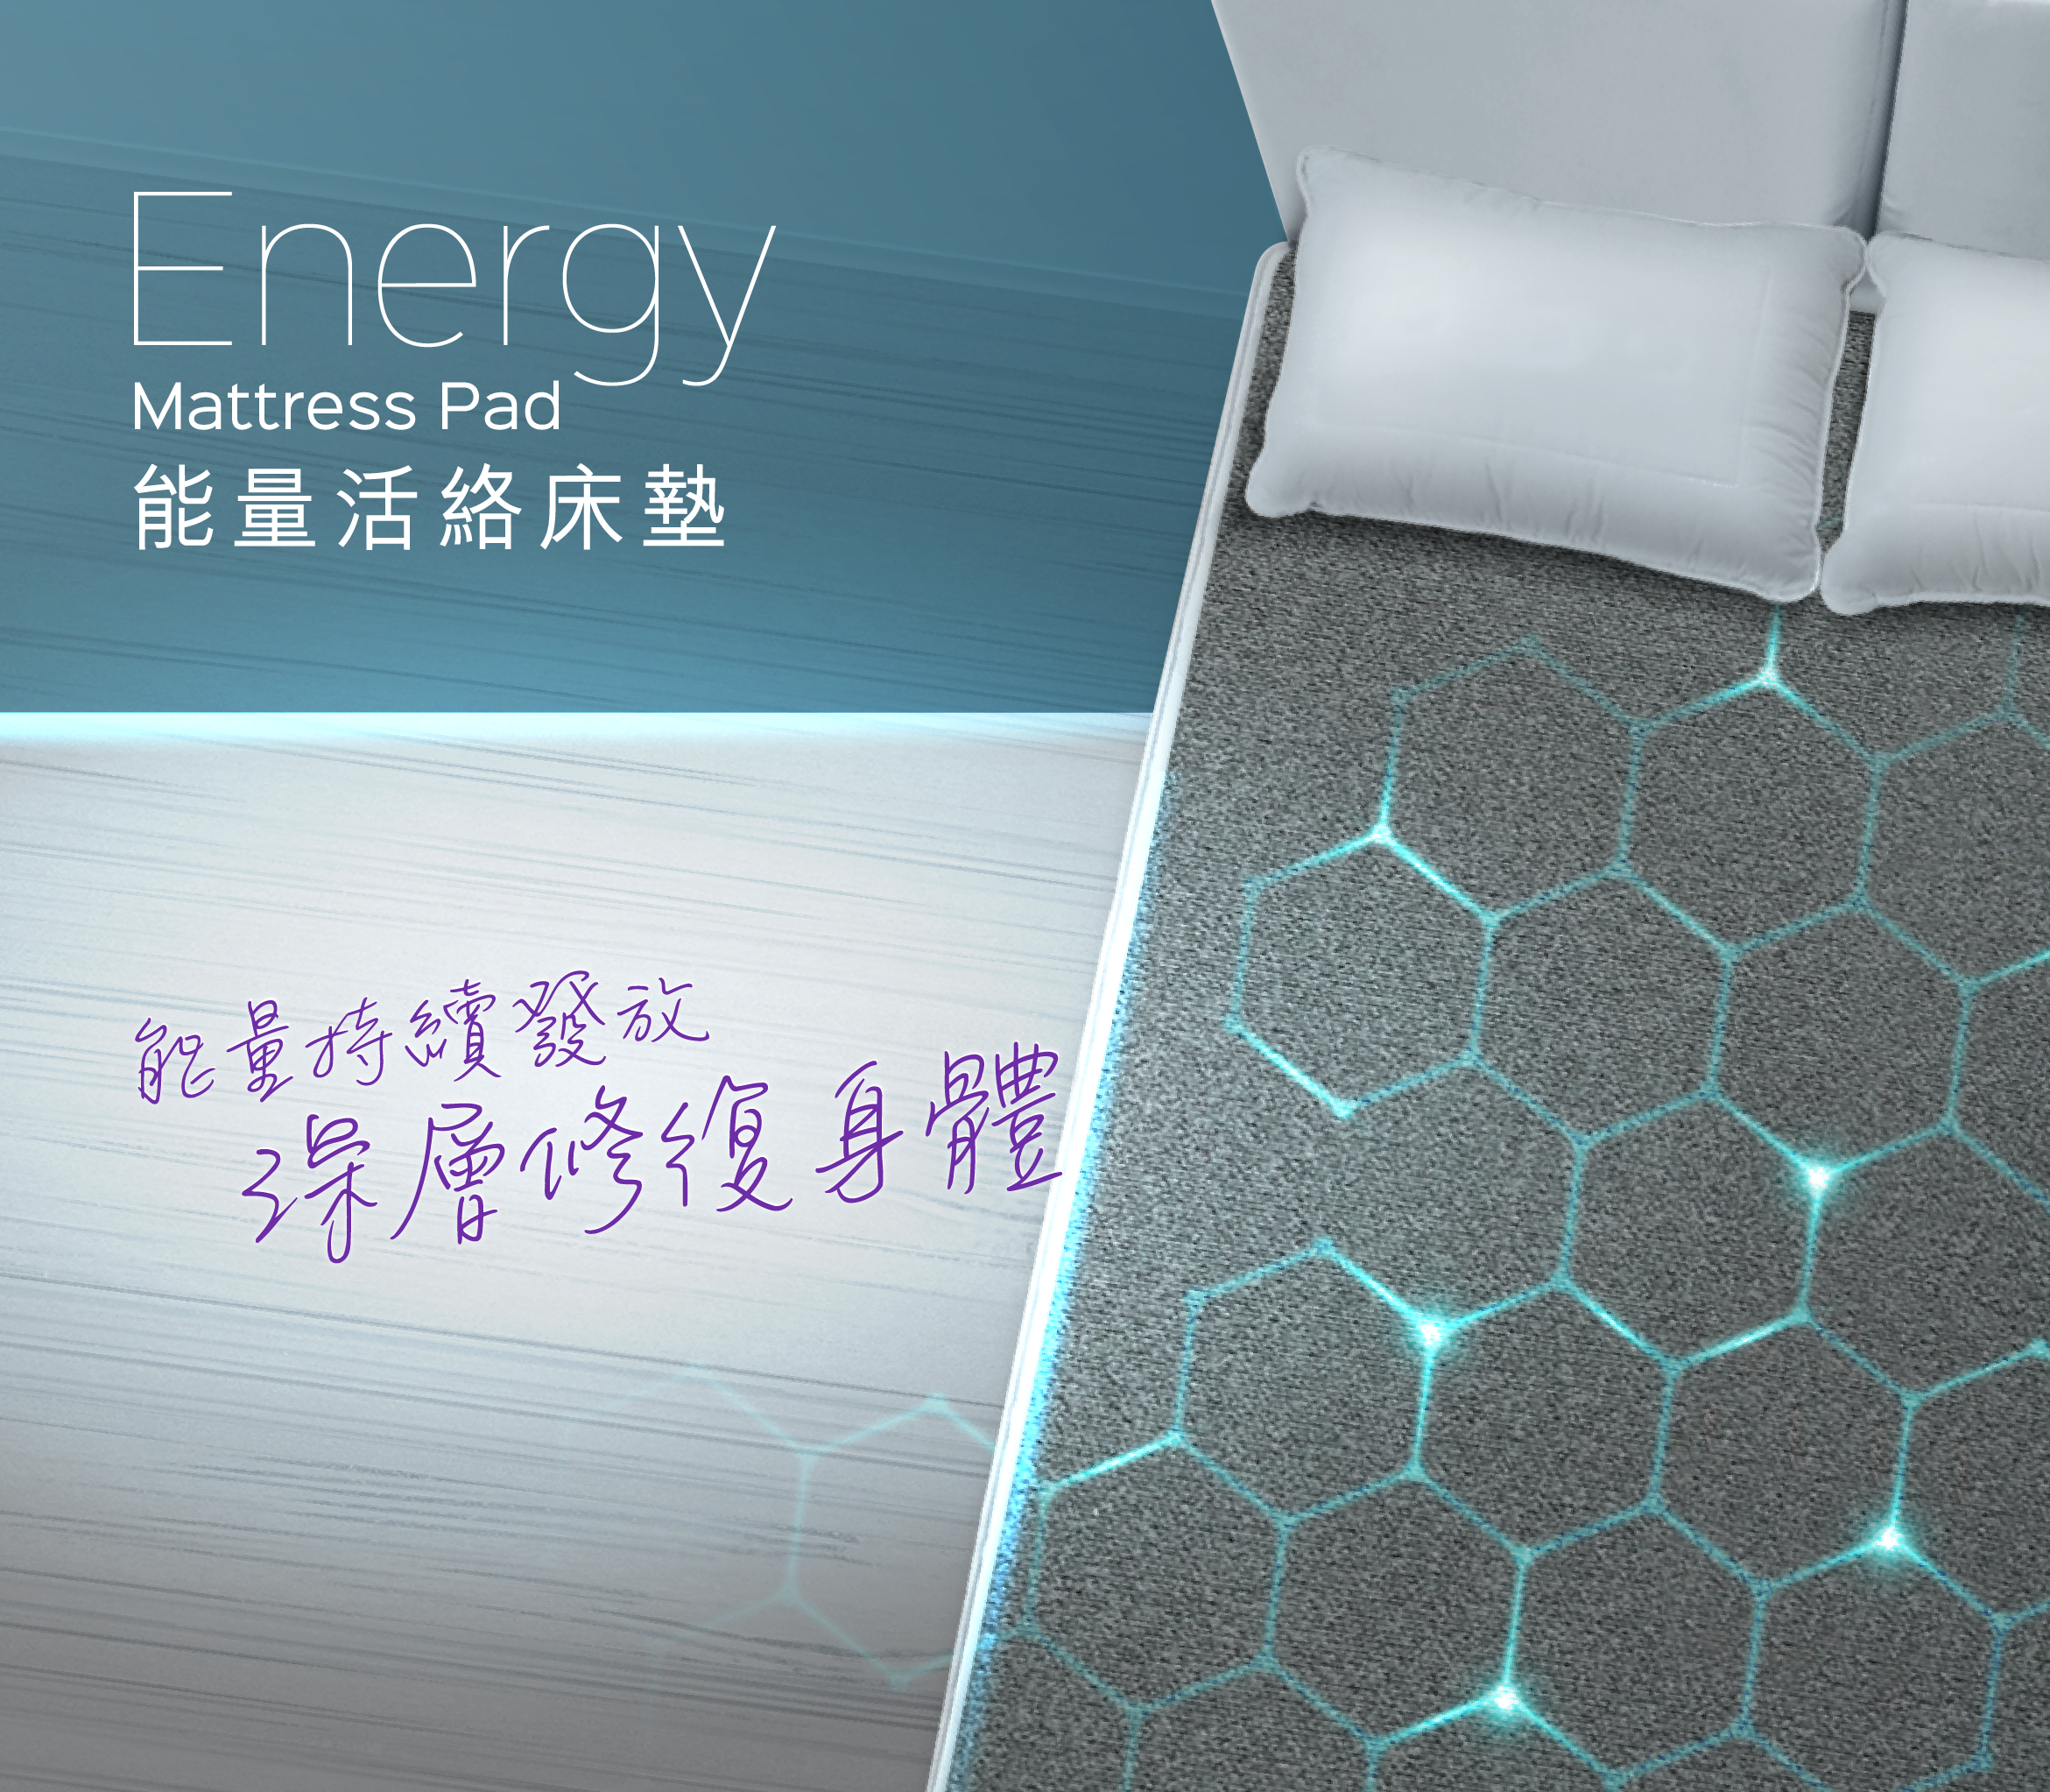 Energy Mattress Pad Related Homepage Hero Mobile ZH